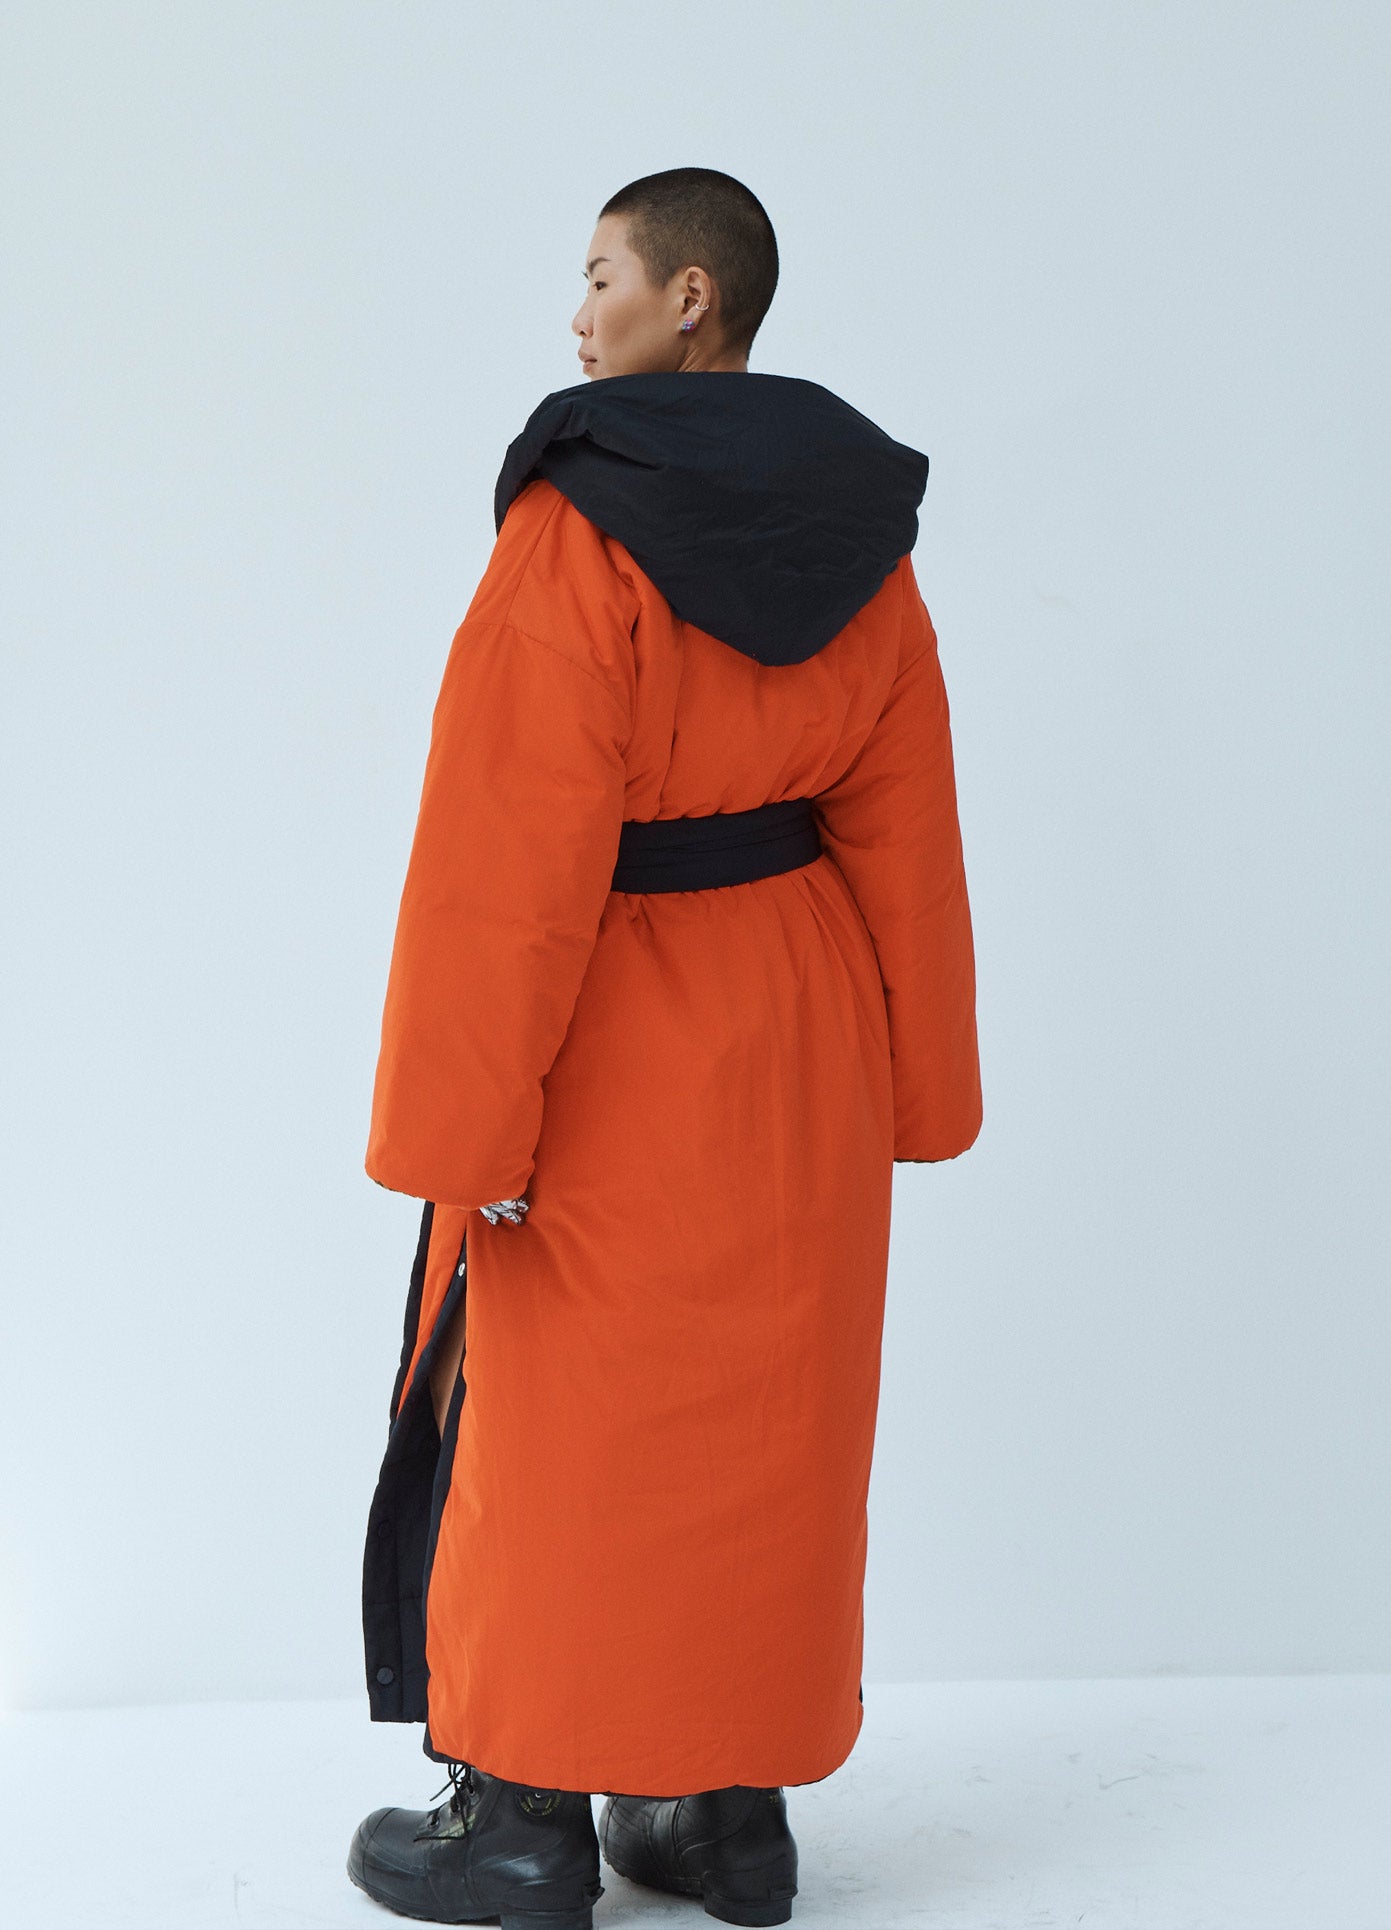 MONSE Techno Puffer Robe in Bright Orange on Model Back View